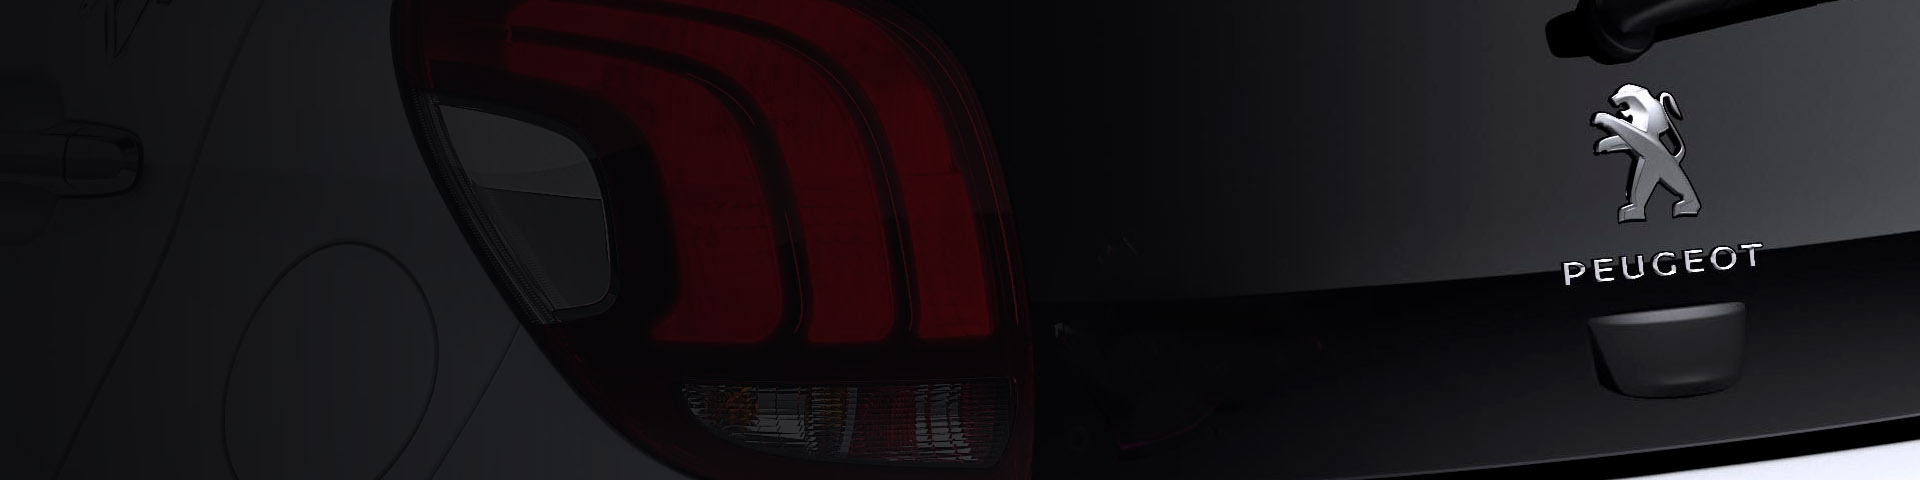 Peugeot 408 Backdrop